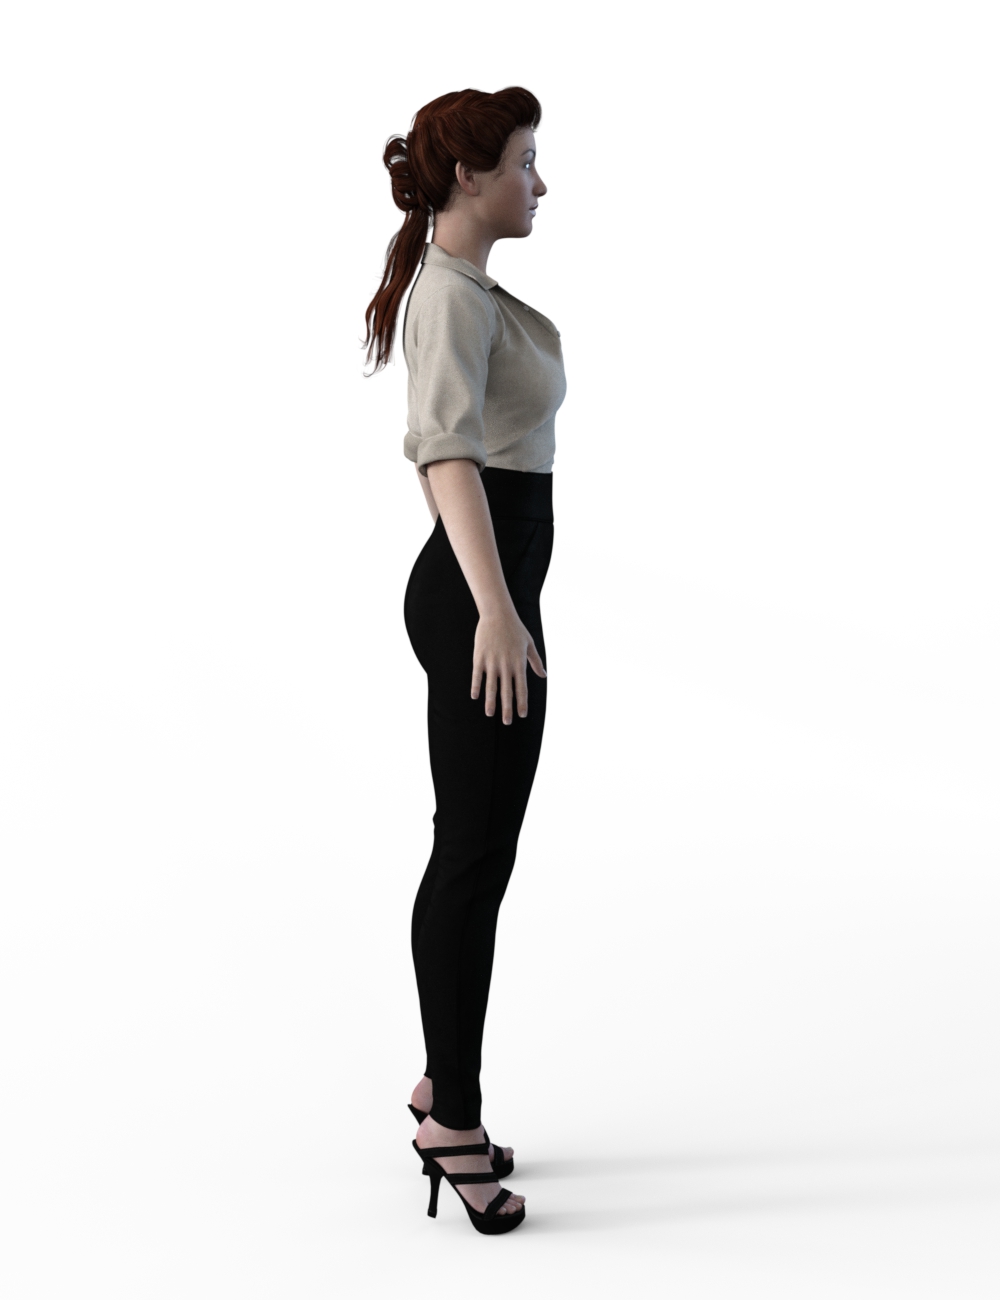 FBX- Base Female Trend Setter by: Paleo, 3D Models by Daz 3D